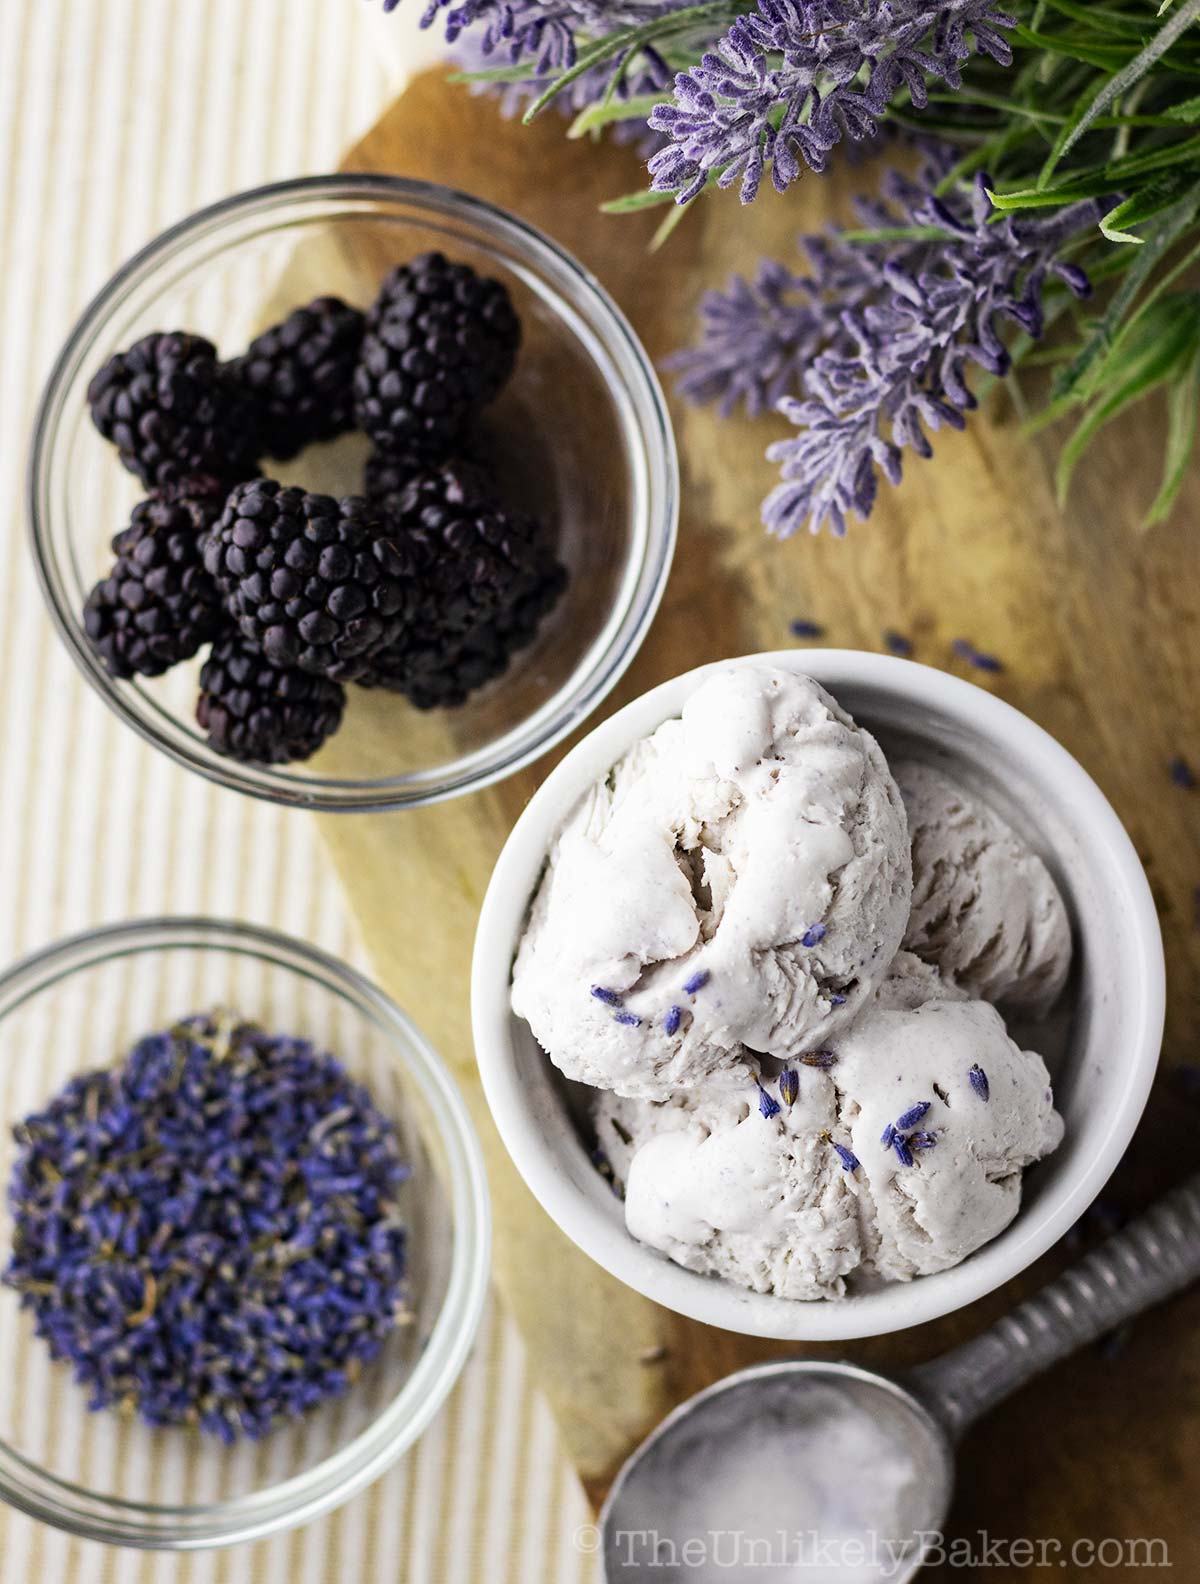 Overhead shot of lavender ice cream, blackberries and lavender buds.